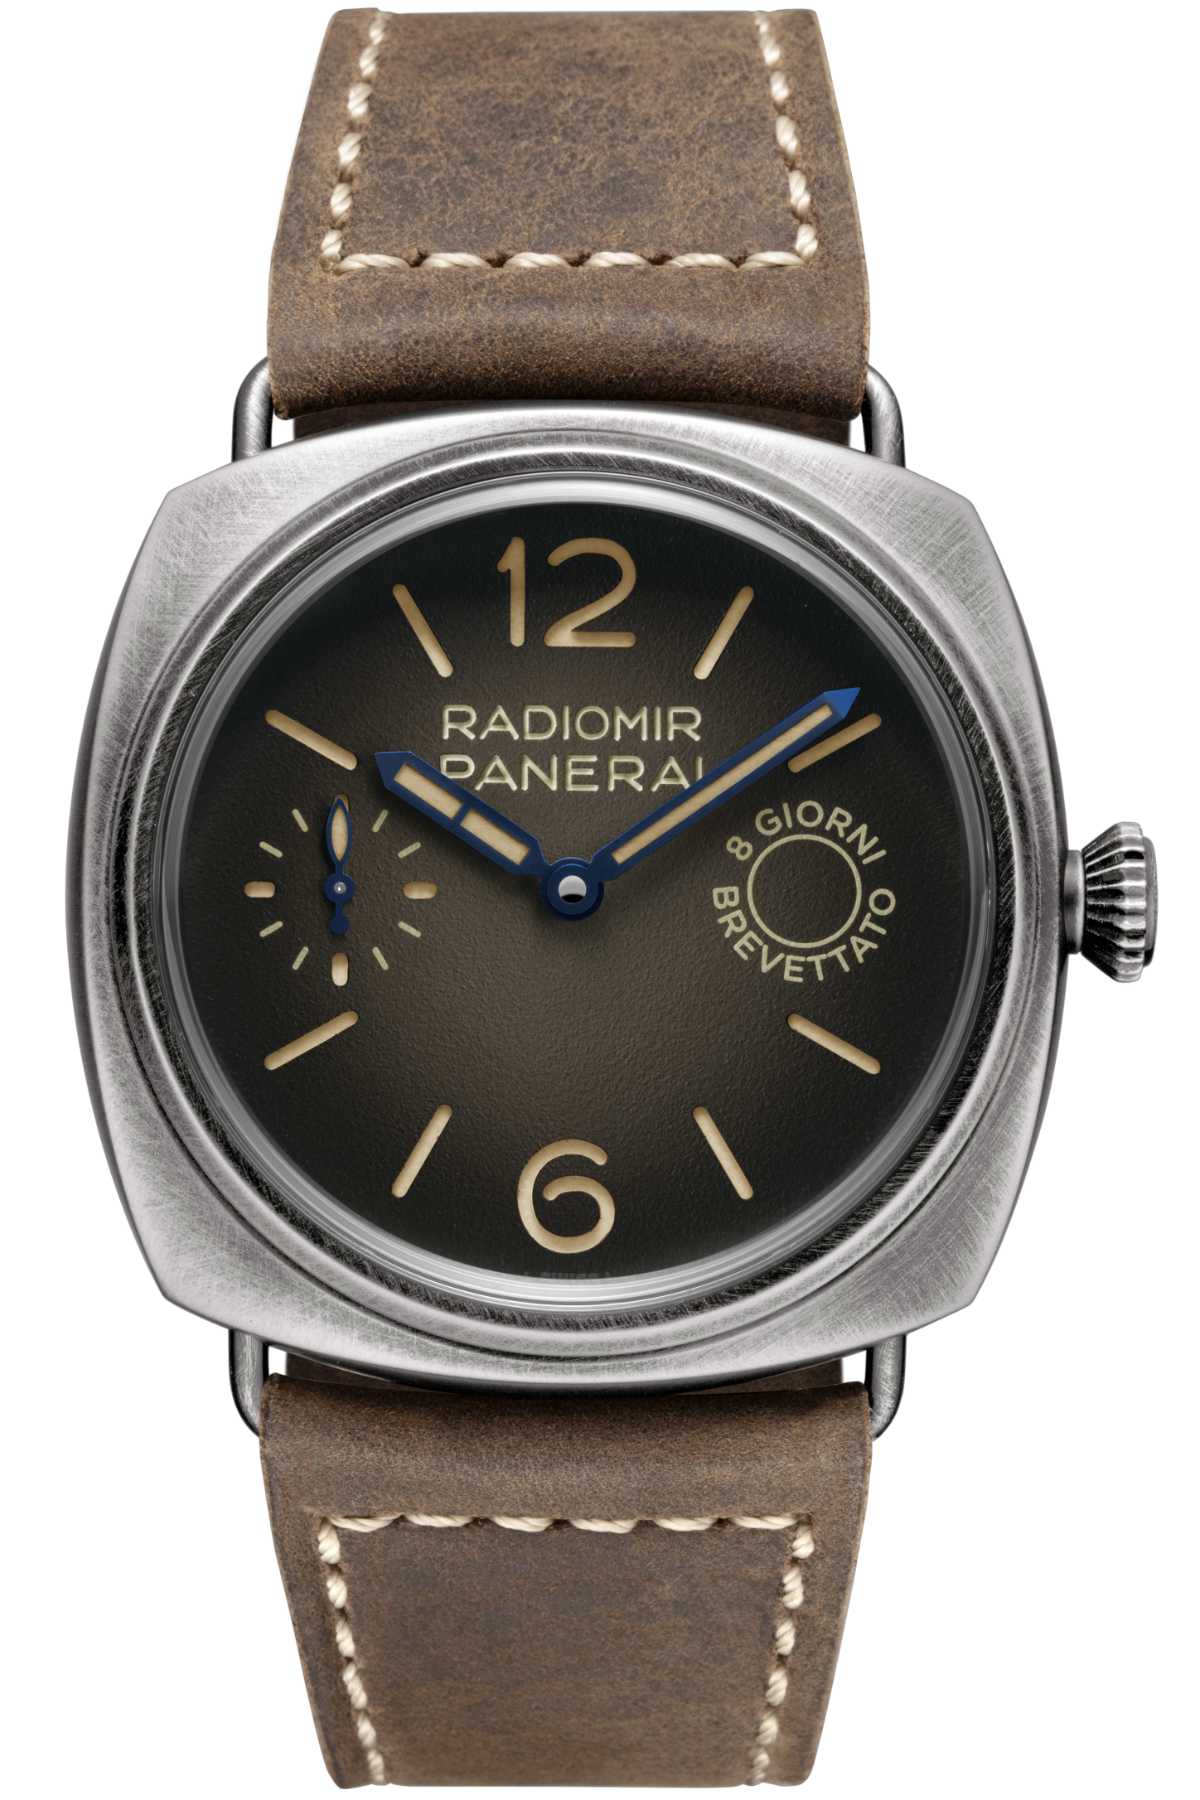 Panerai Introduces Its New Radiomir Otto Giorni Watch